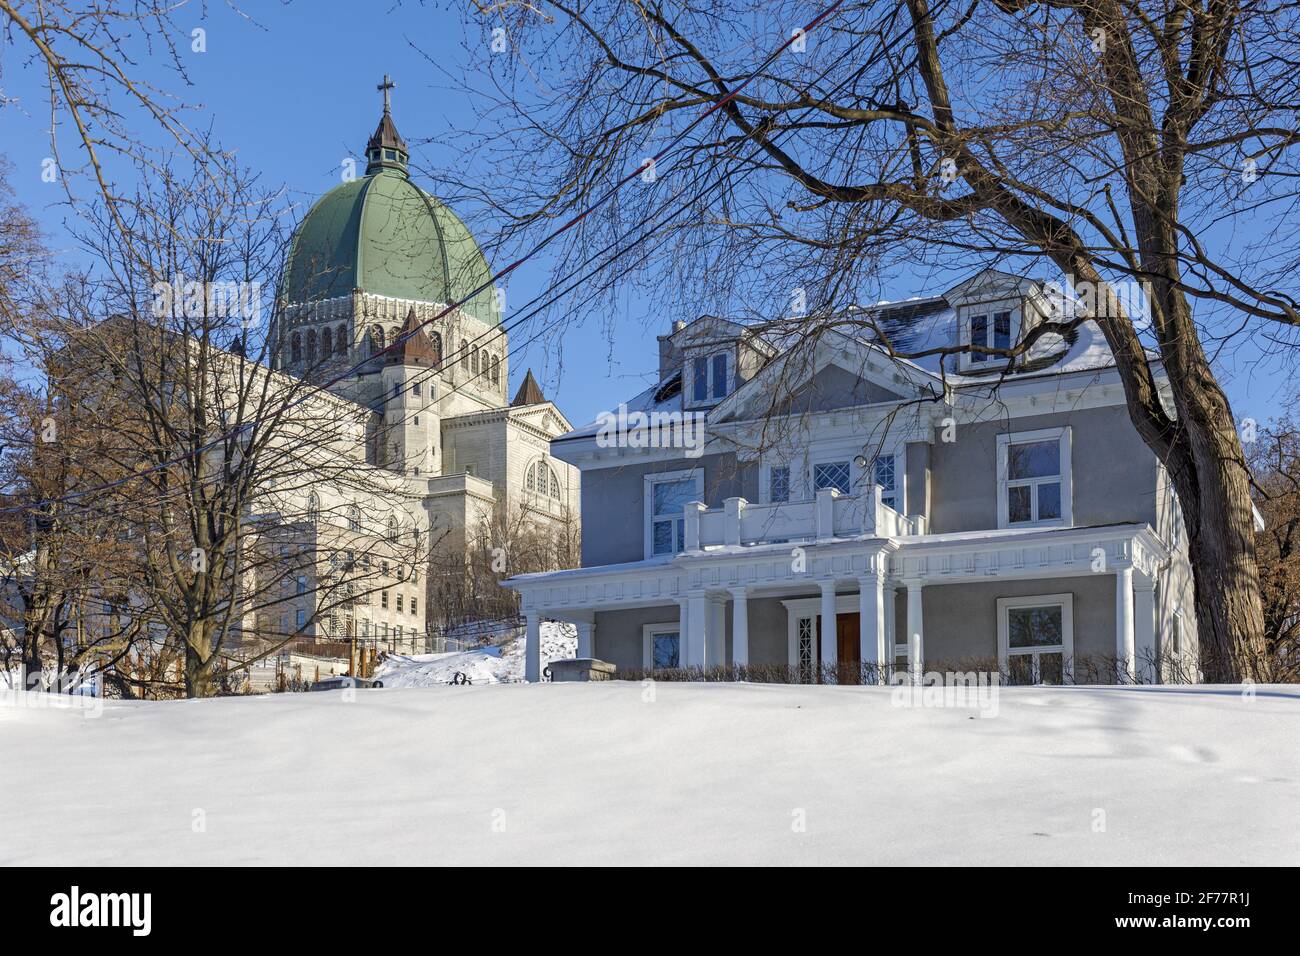 Canada, Quebec province, Montreal, Saint Joseph's Oratory of Mount Royal Stock Photo